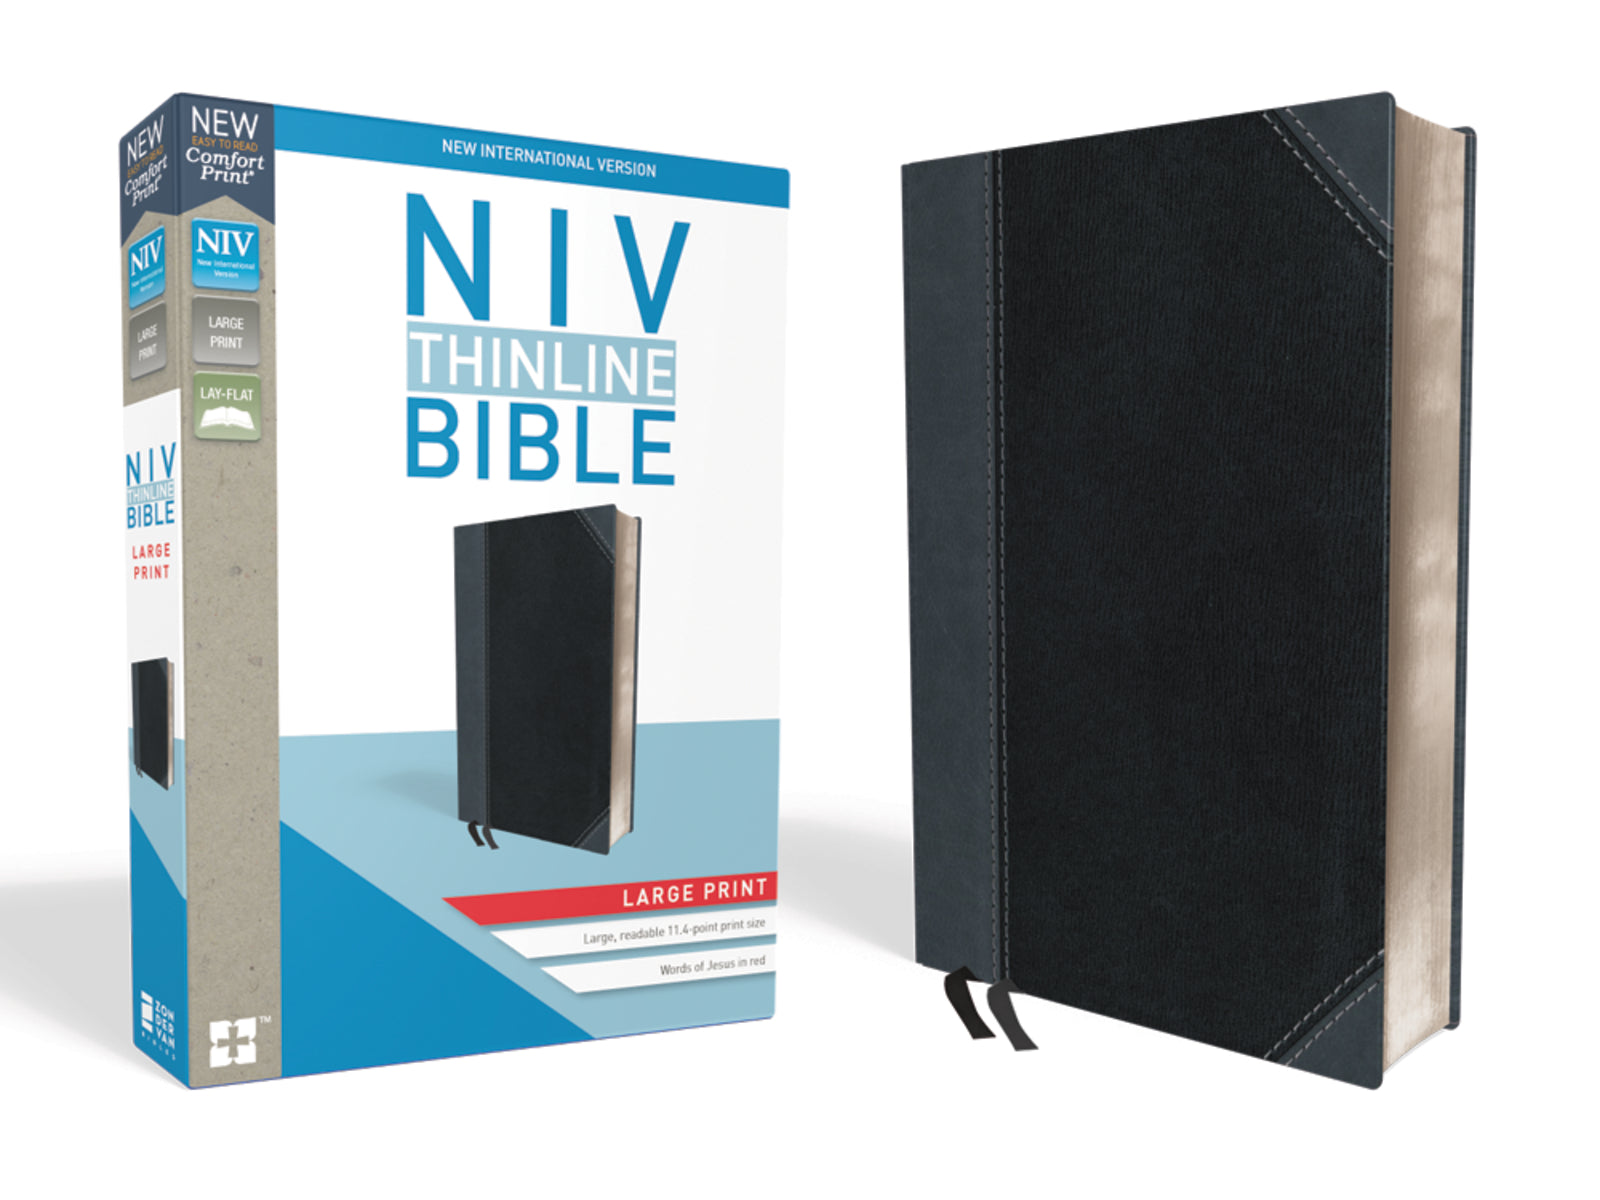 NIV Thinline Bible Large Print Comfort-Black/Gray